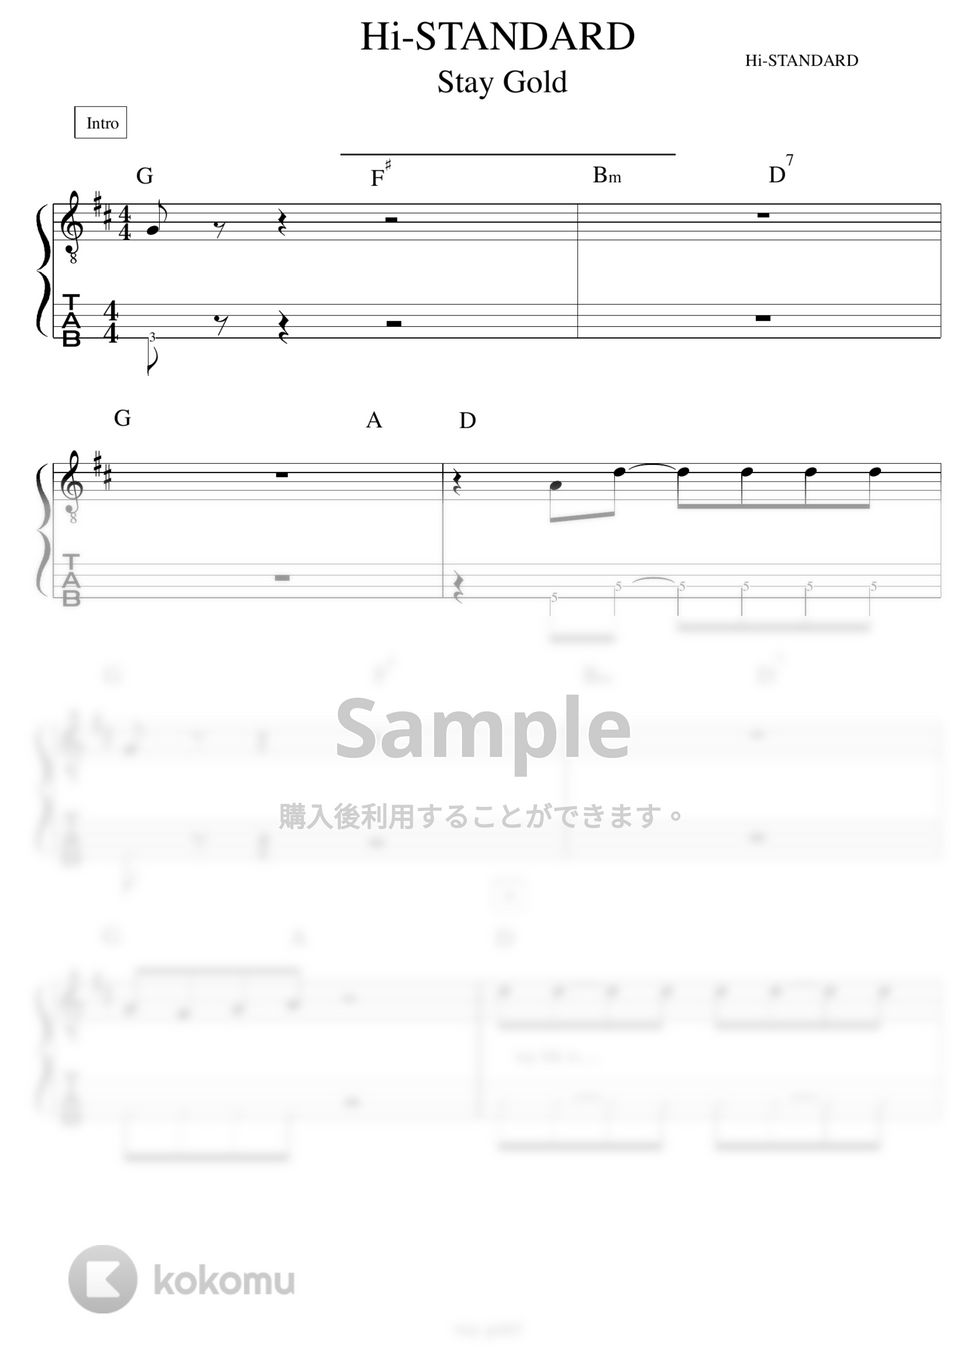 Hi-STANDARD - Stay Gold ベース演奏動画あり by バイトーン音楽教室